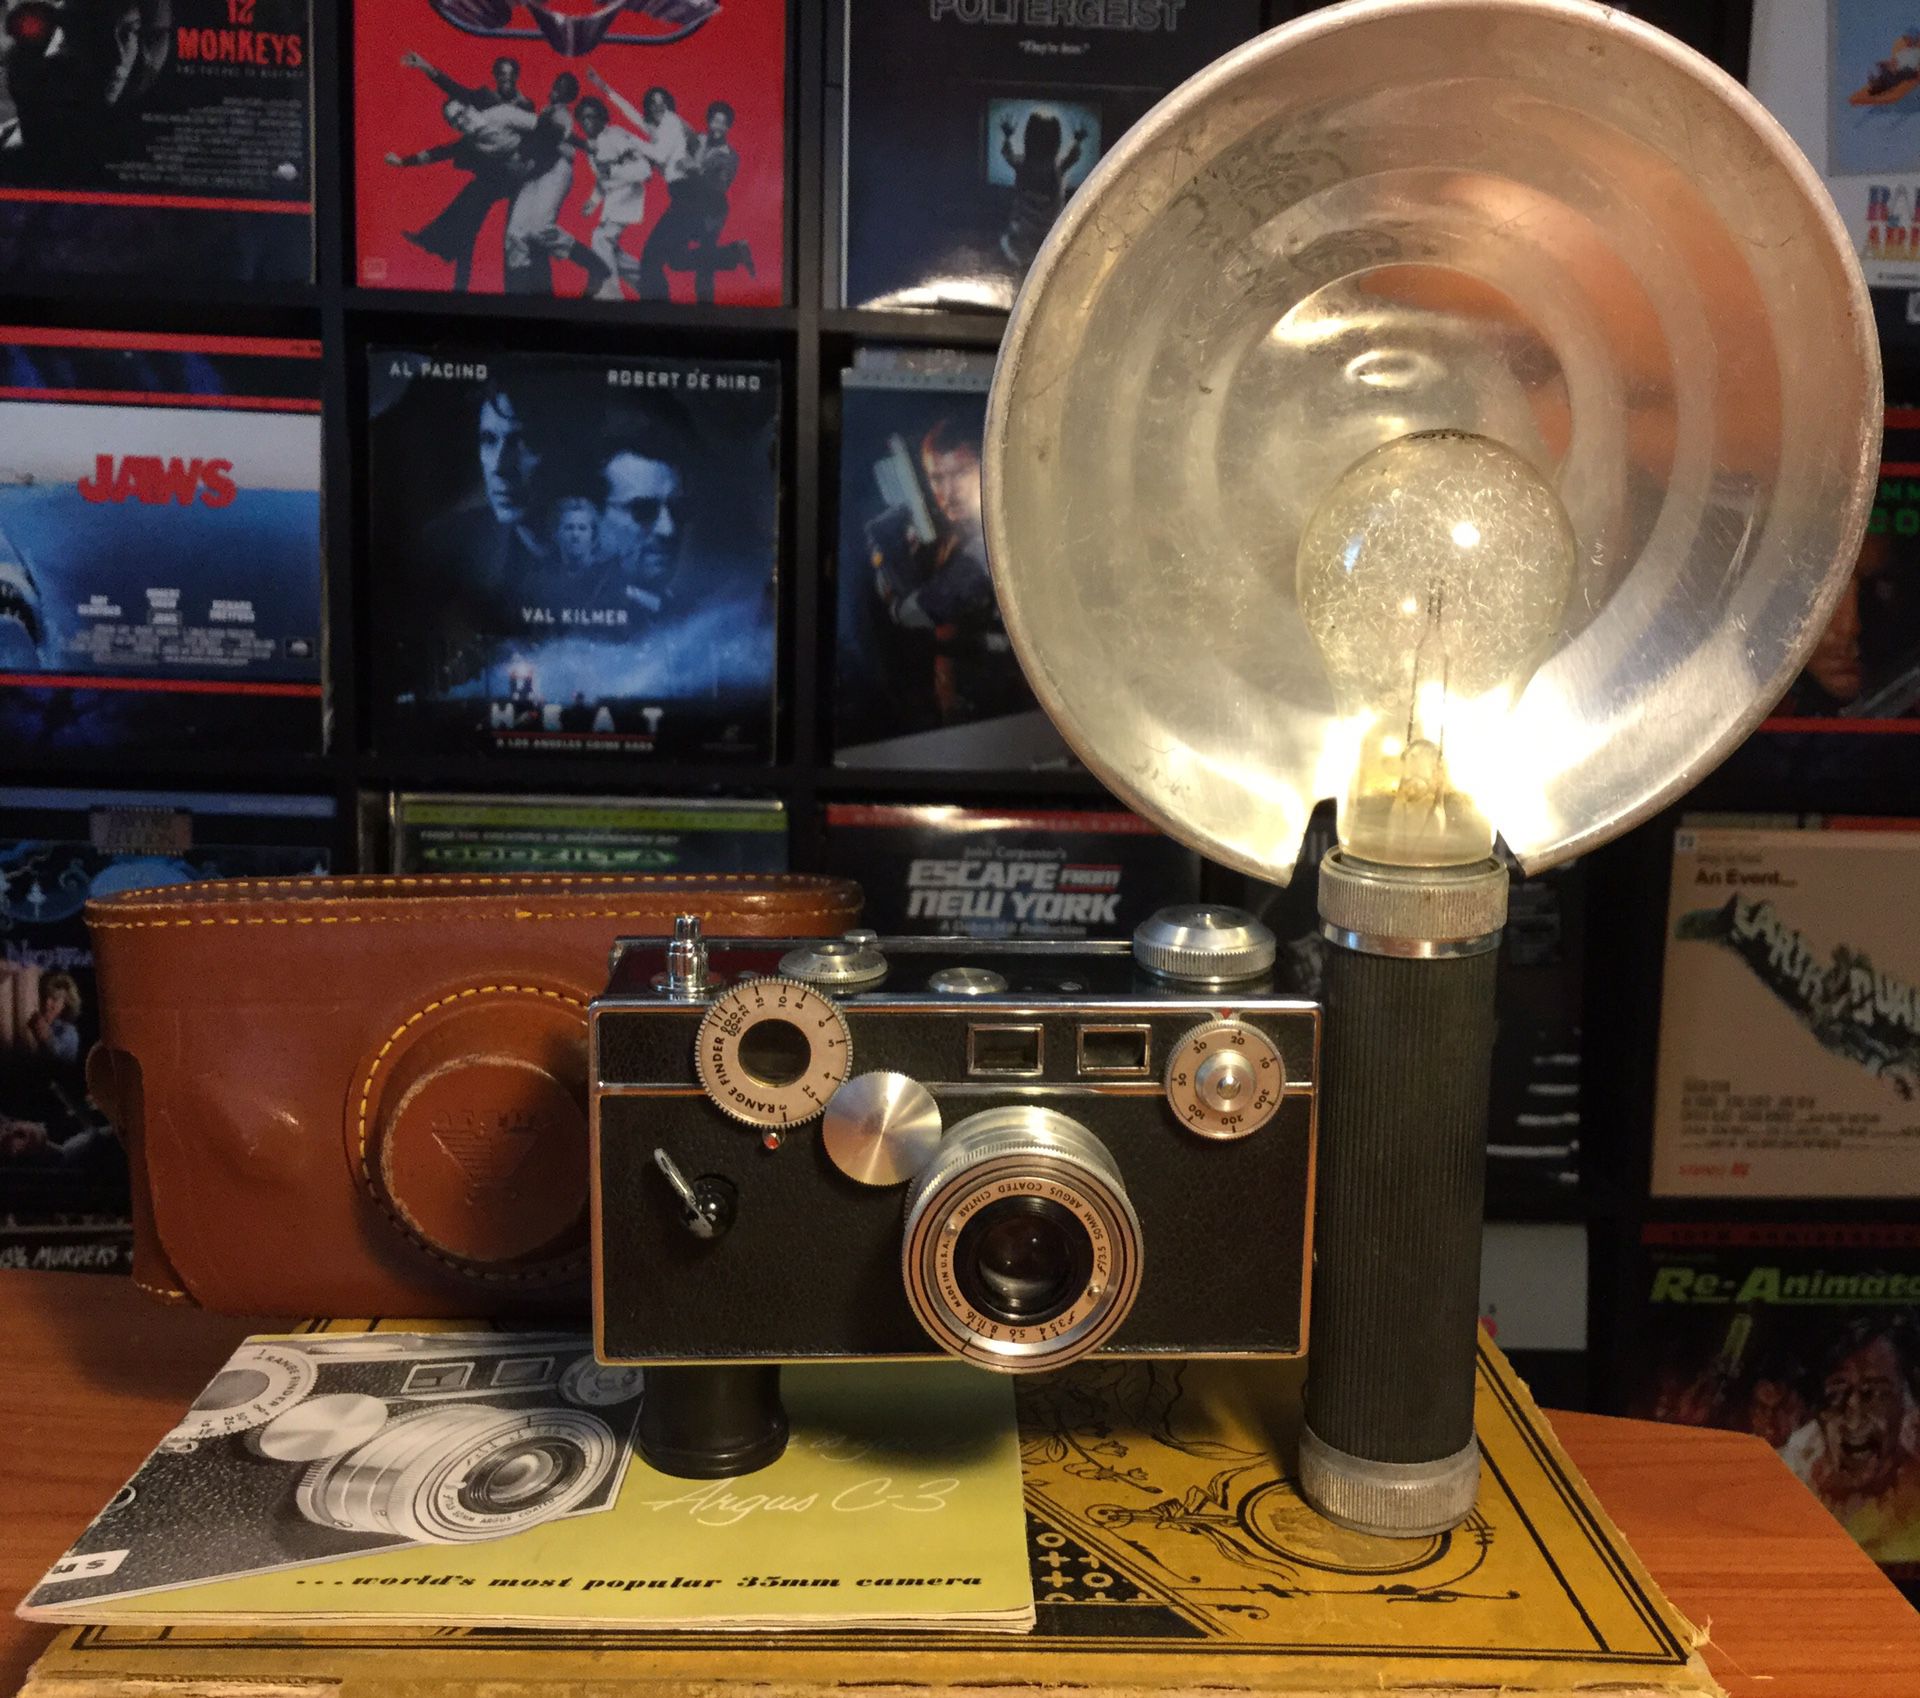 Argus THE BRICK 35mm Range Finder Film Camera With Flash, Case & Manual - See Description